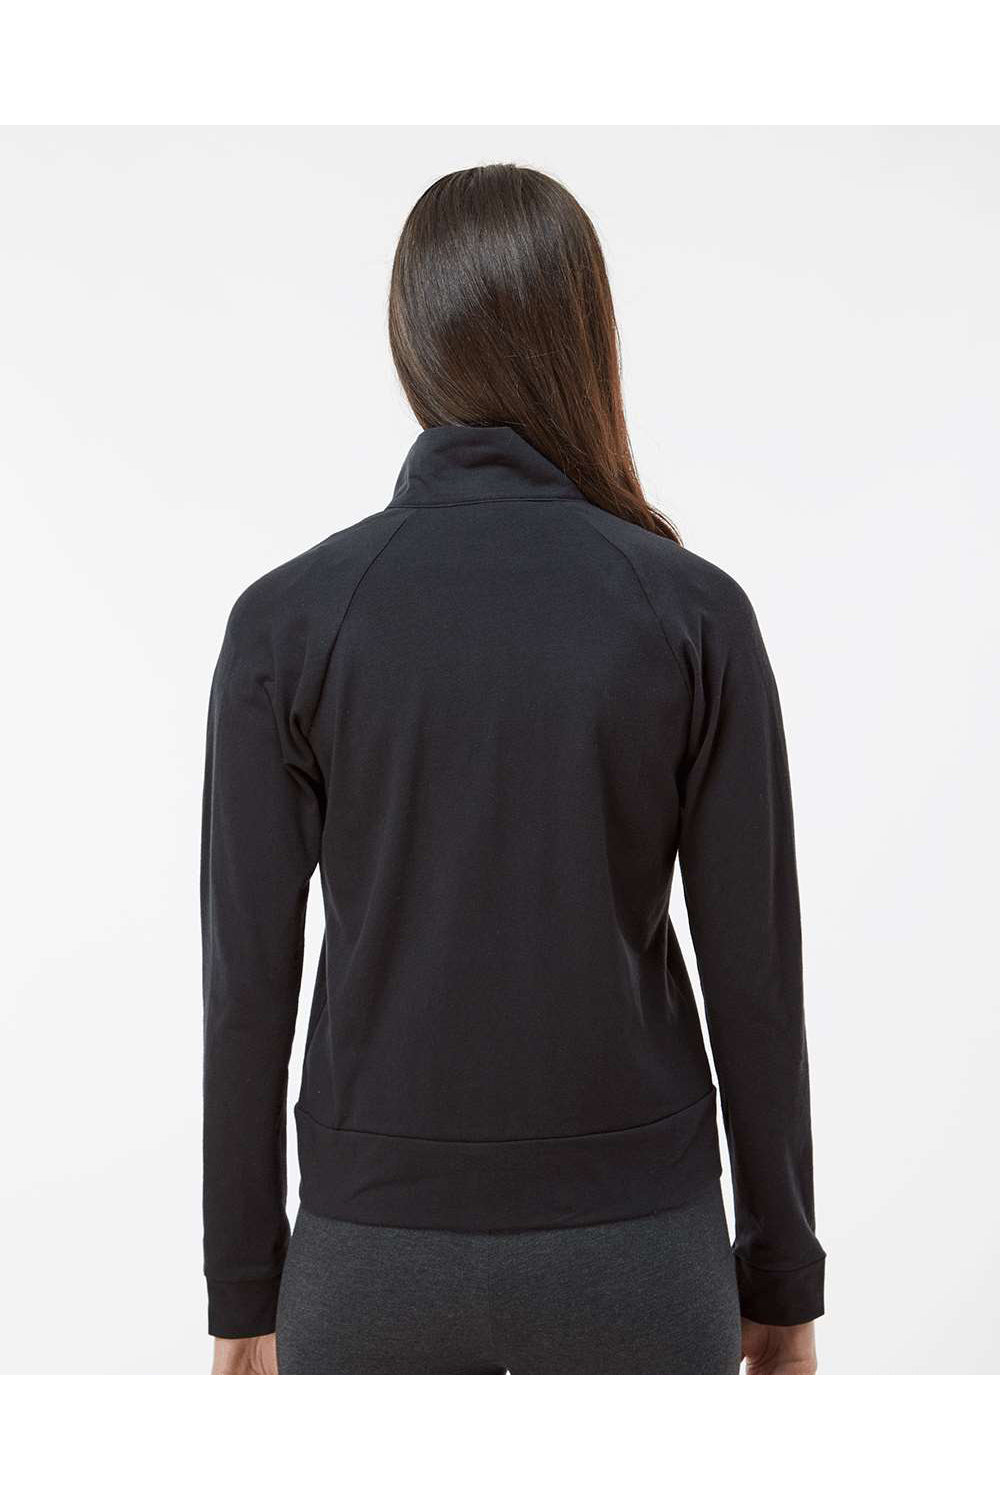 Boxercraft S89 Womens Full Zip Practice Jacket Black Model Back